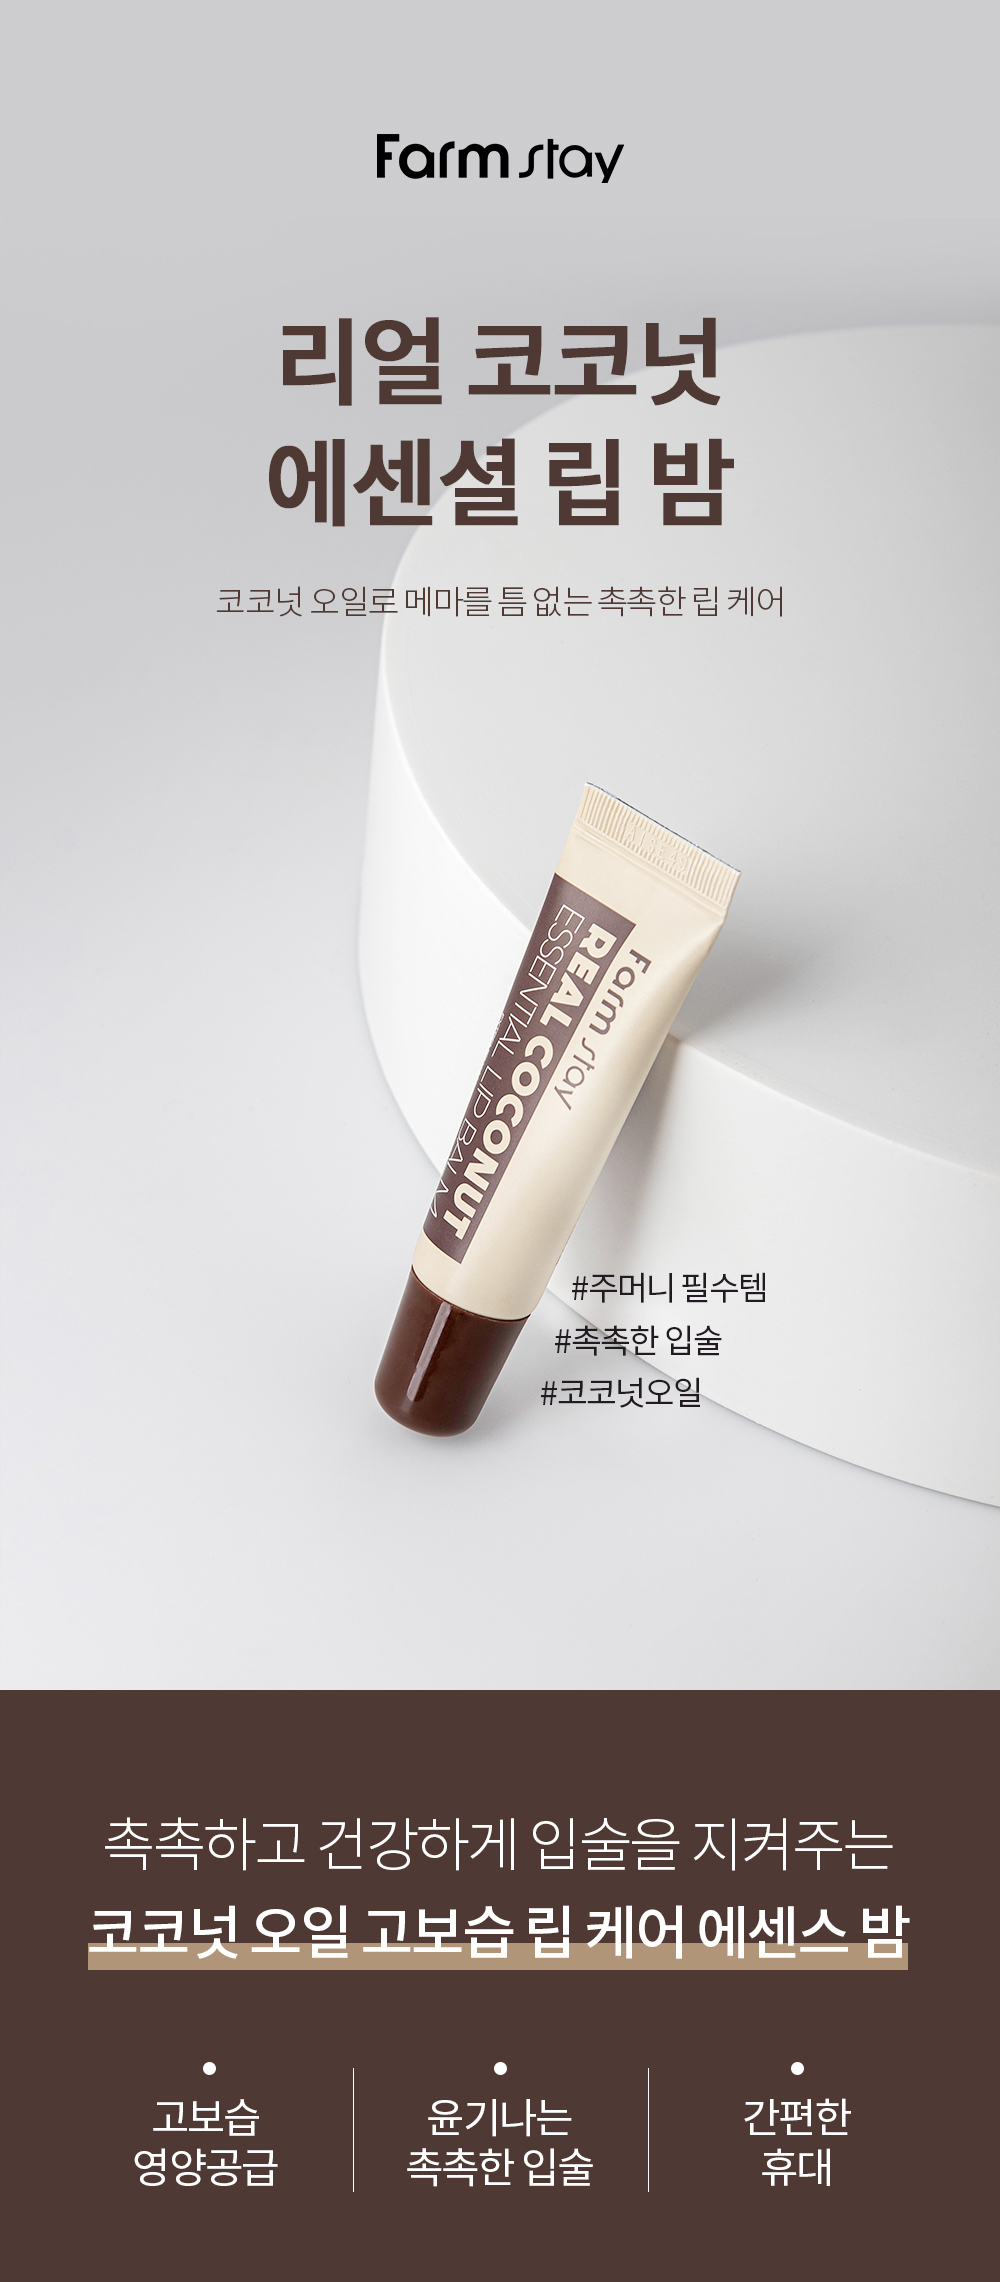 cosmetics product image-S8L1